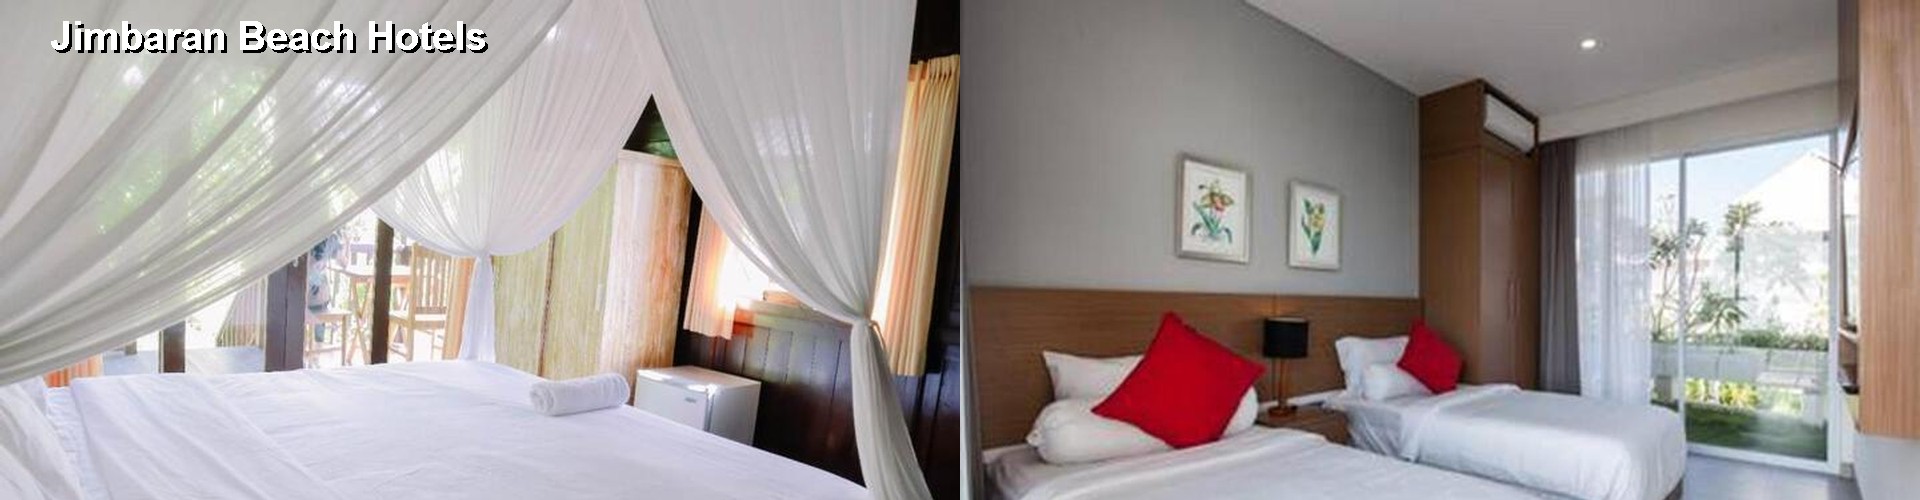 5 Best Hotels near Jimbaran Beach